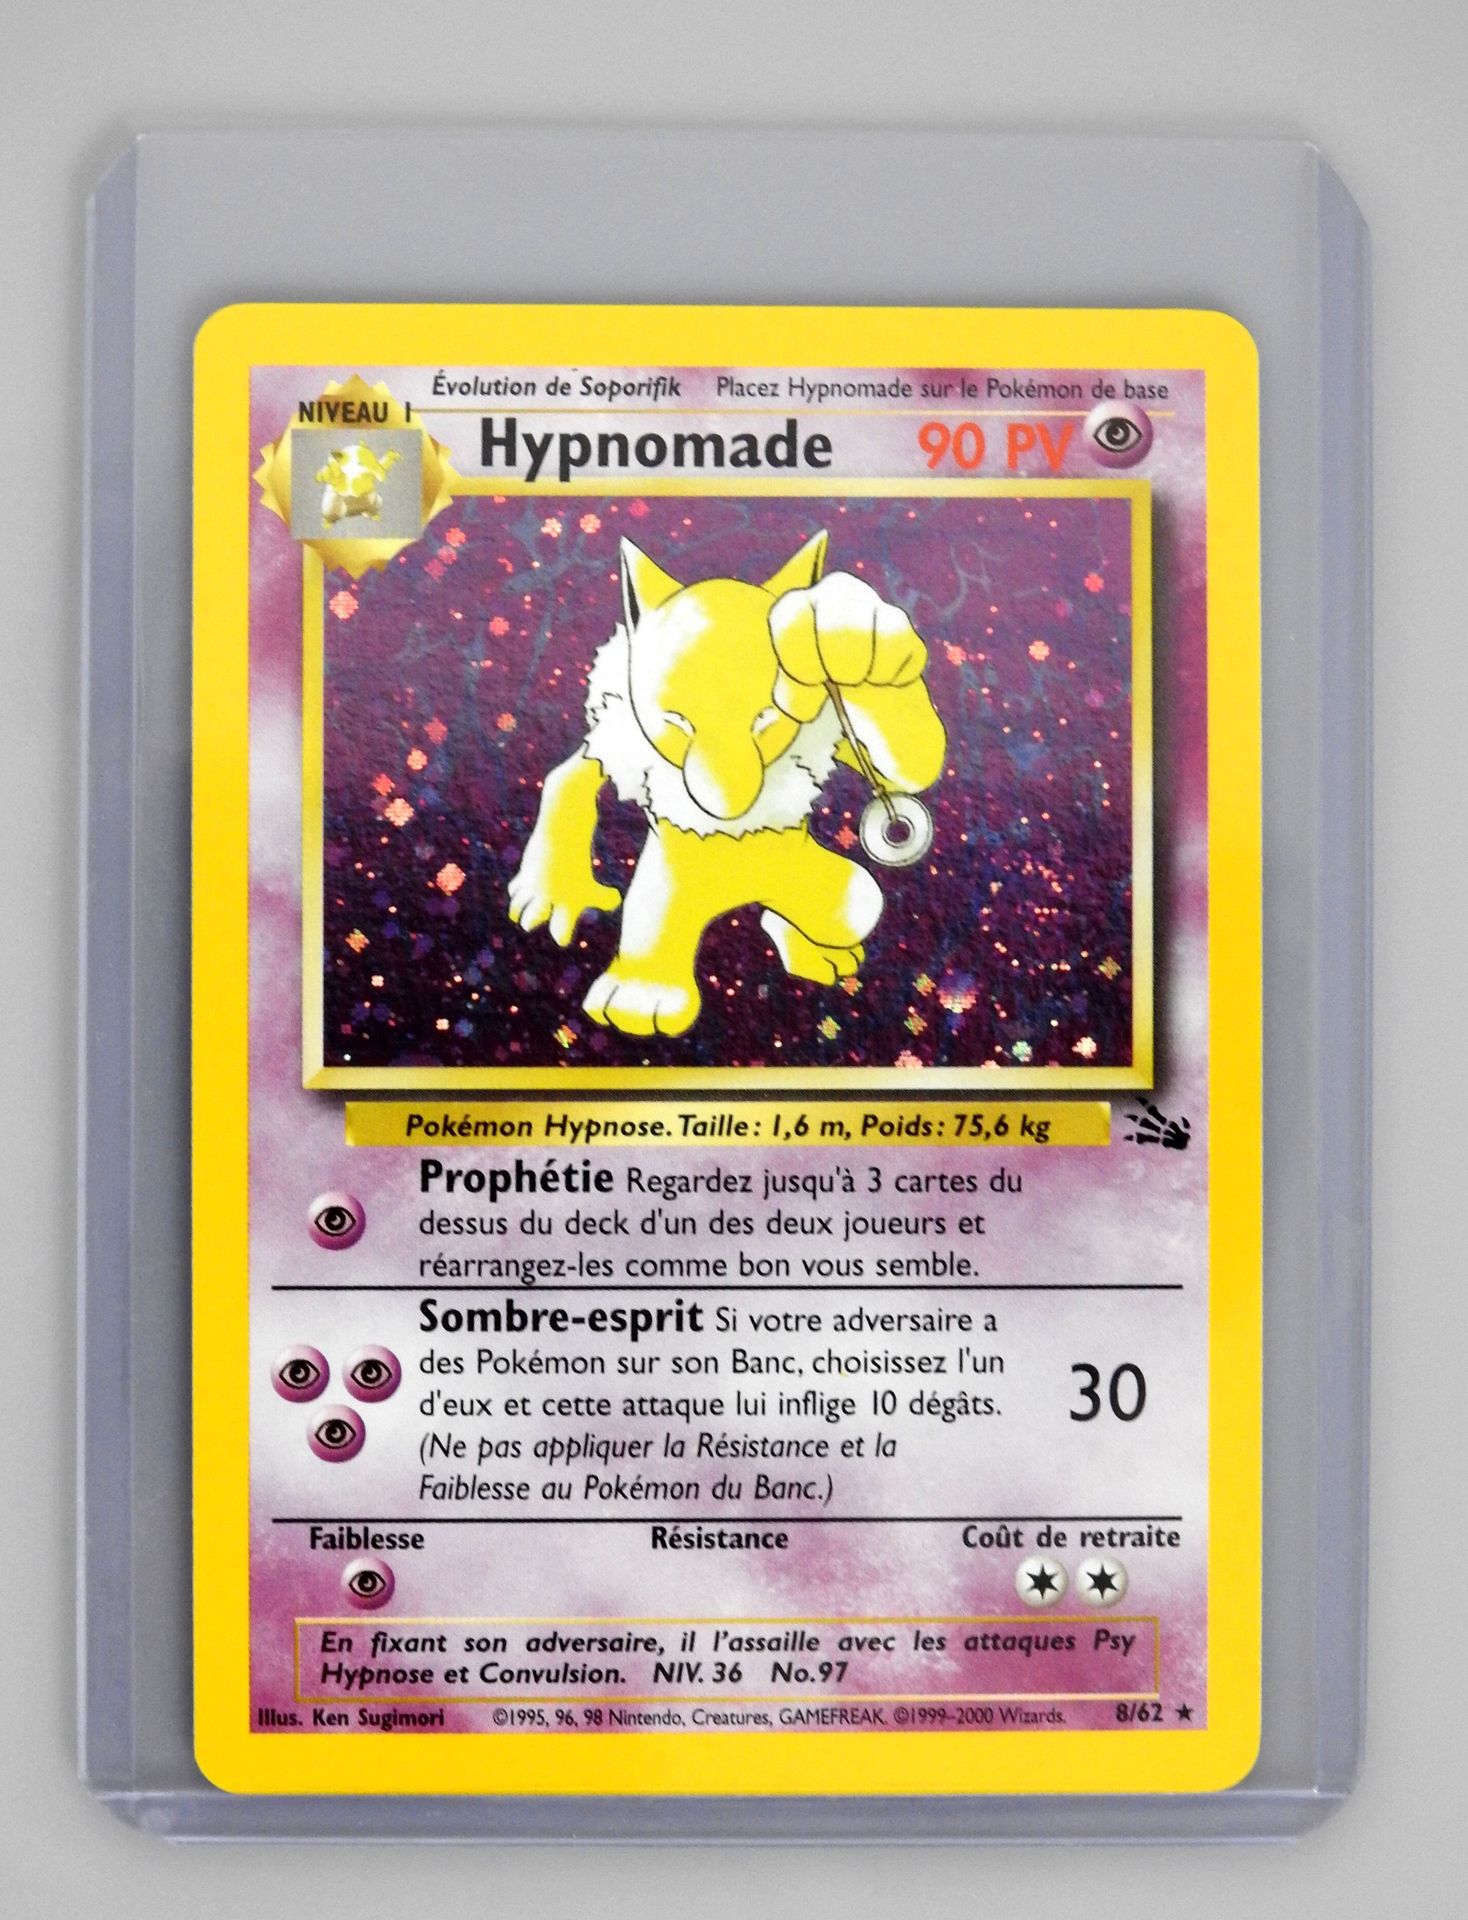 Null 
HYPNOMADE 




Bloc Wizards Fossile 8/62




Carte pokémon en superbe état